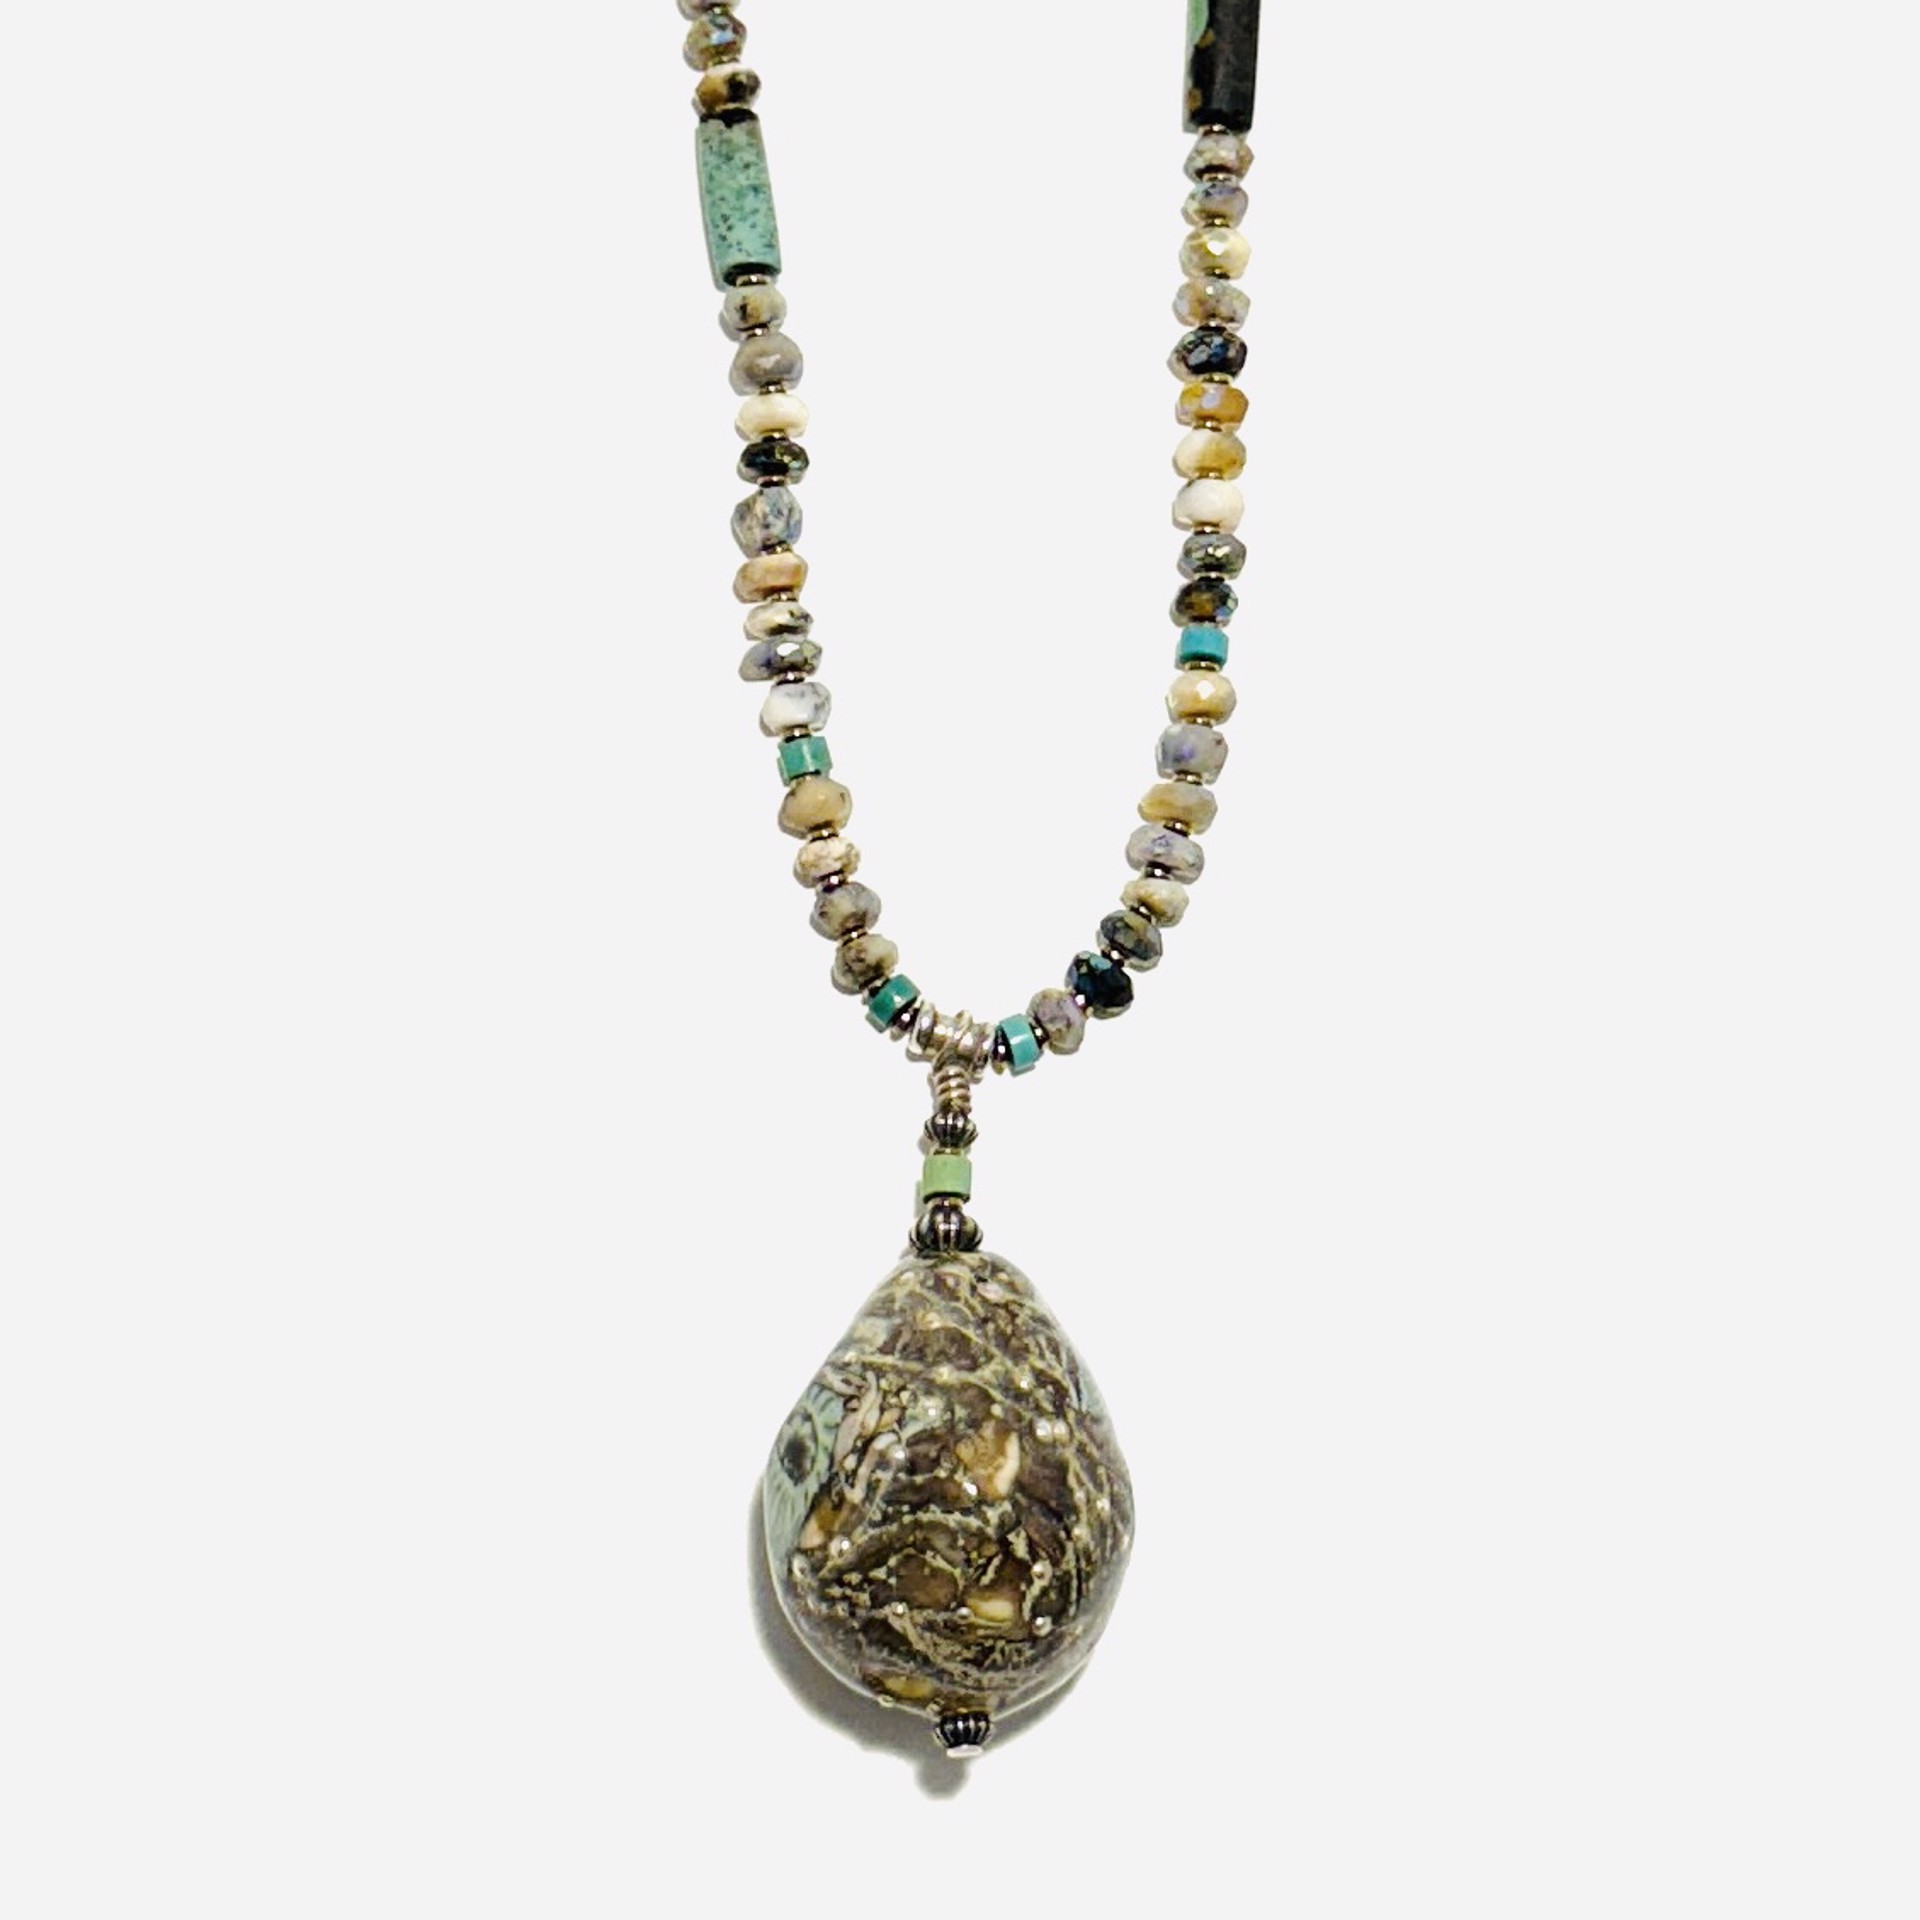 Silver Ivory with Murrini Pendant on Gemstone Necklace LS23-50 by Linda Sacra